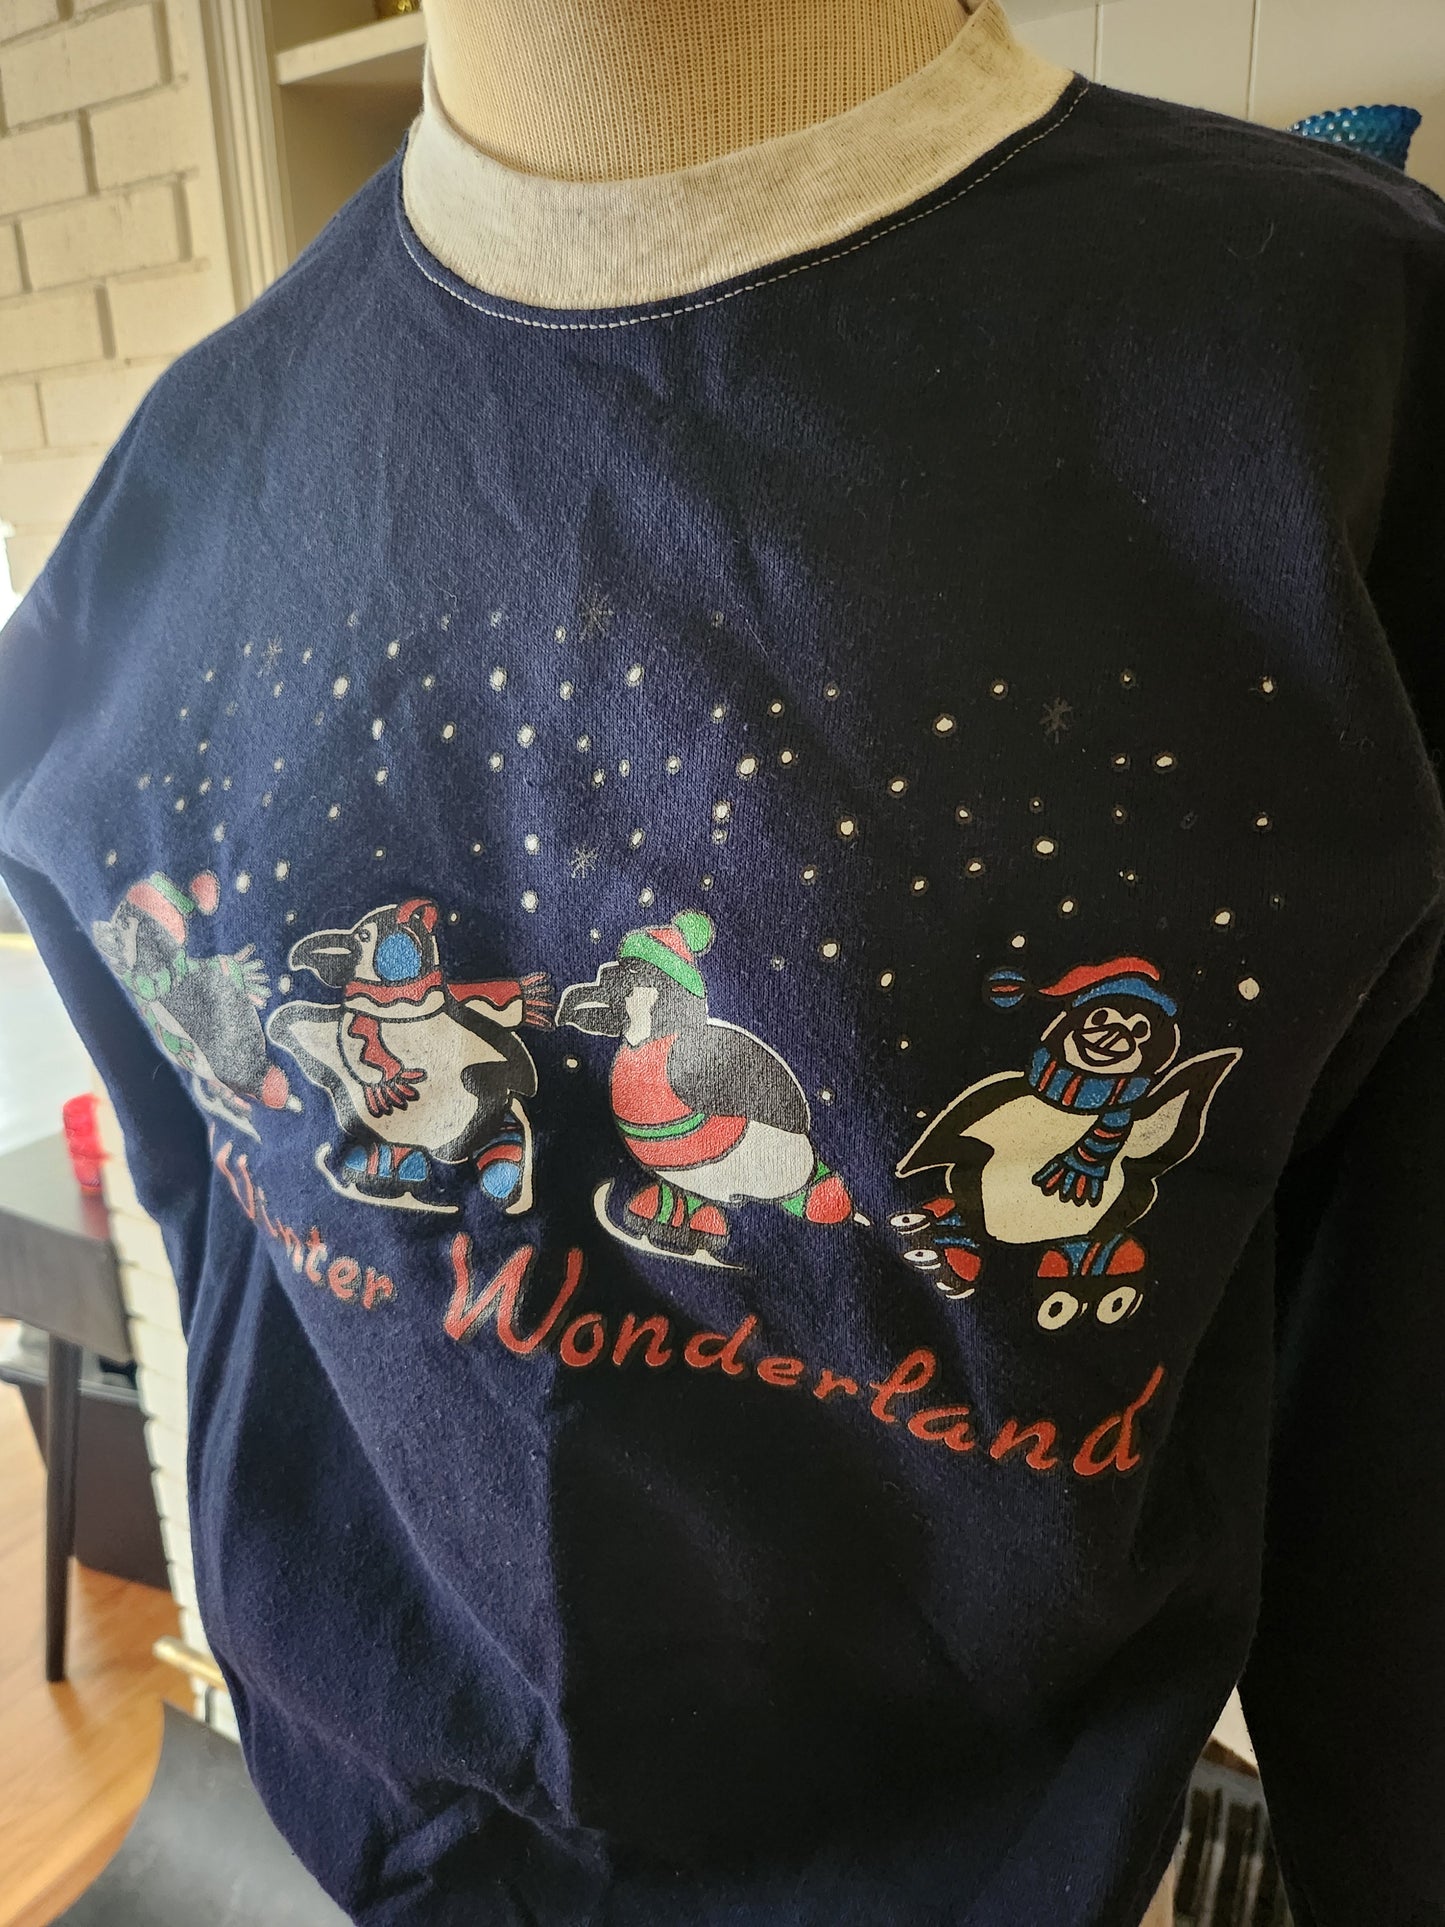 Vintage Winter Wonderland Sweatshirt